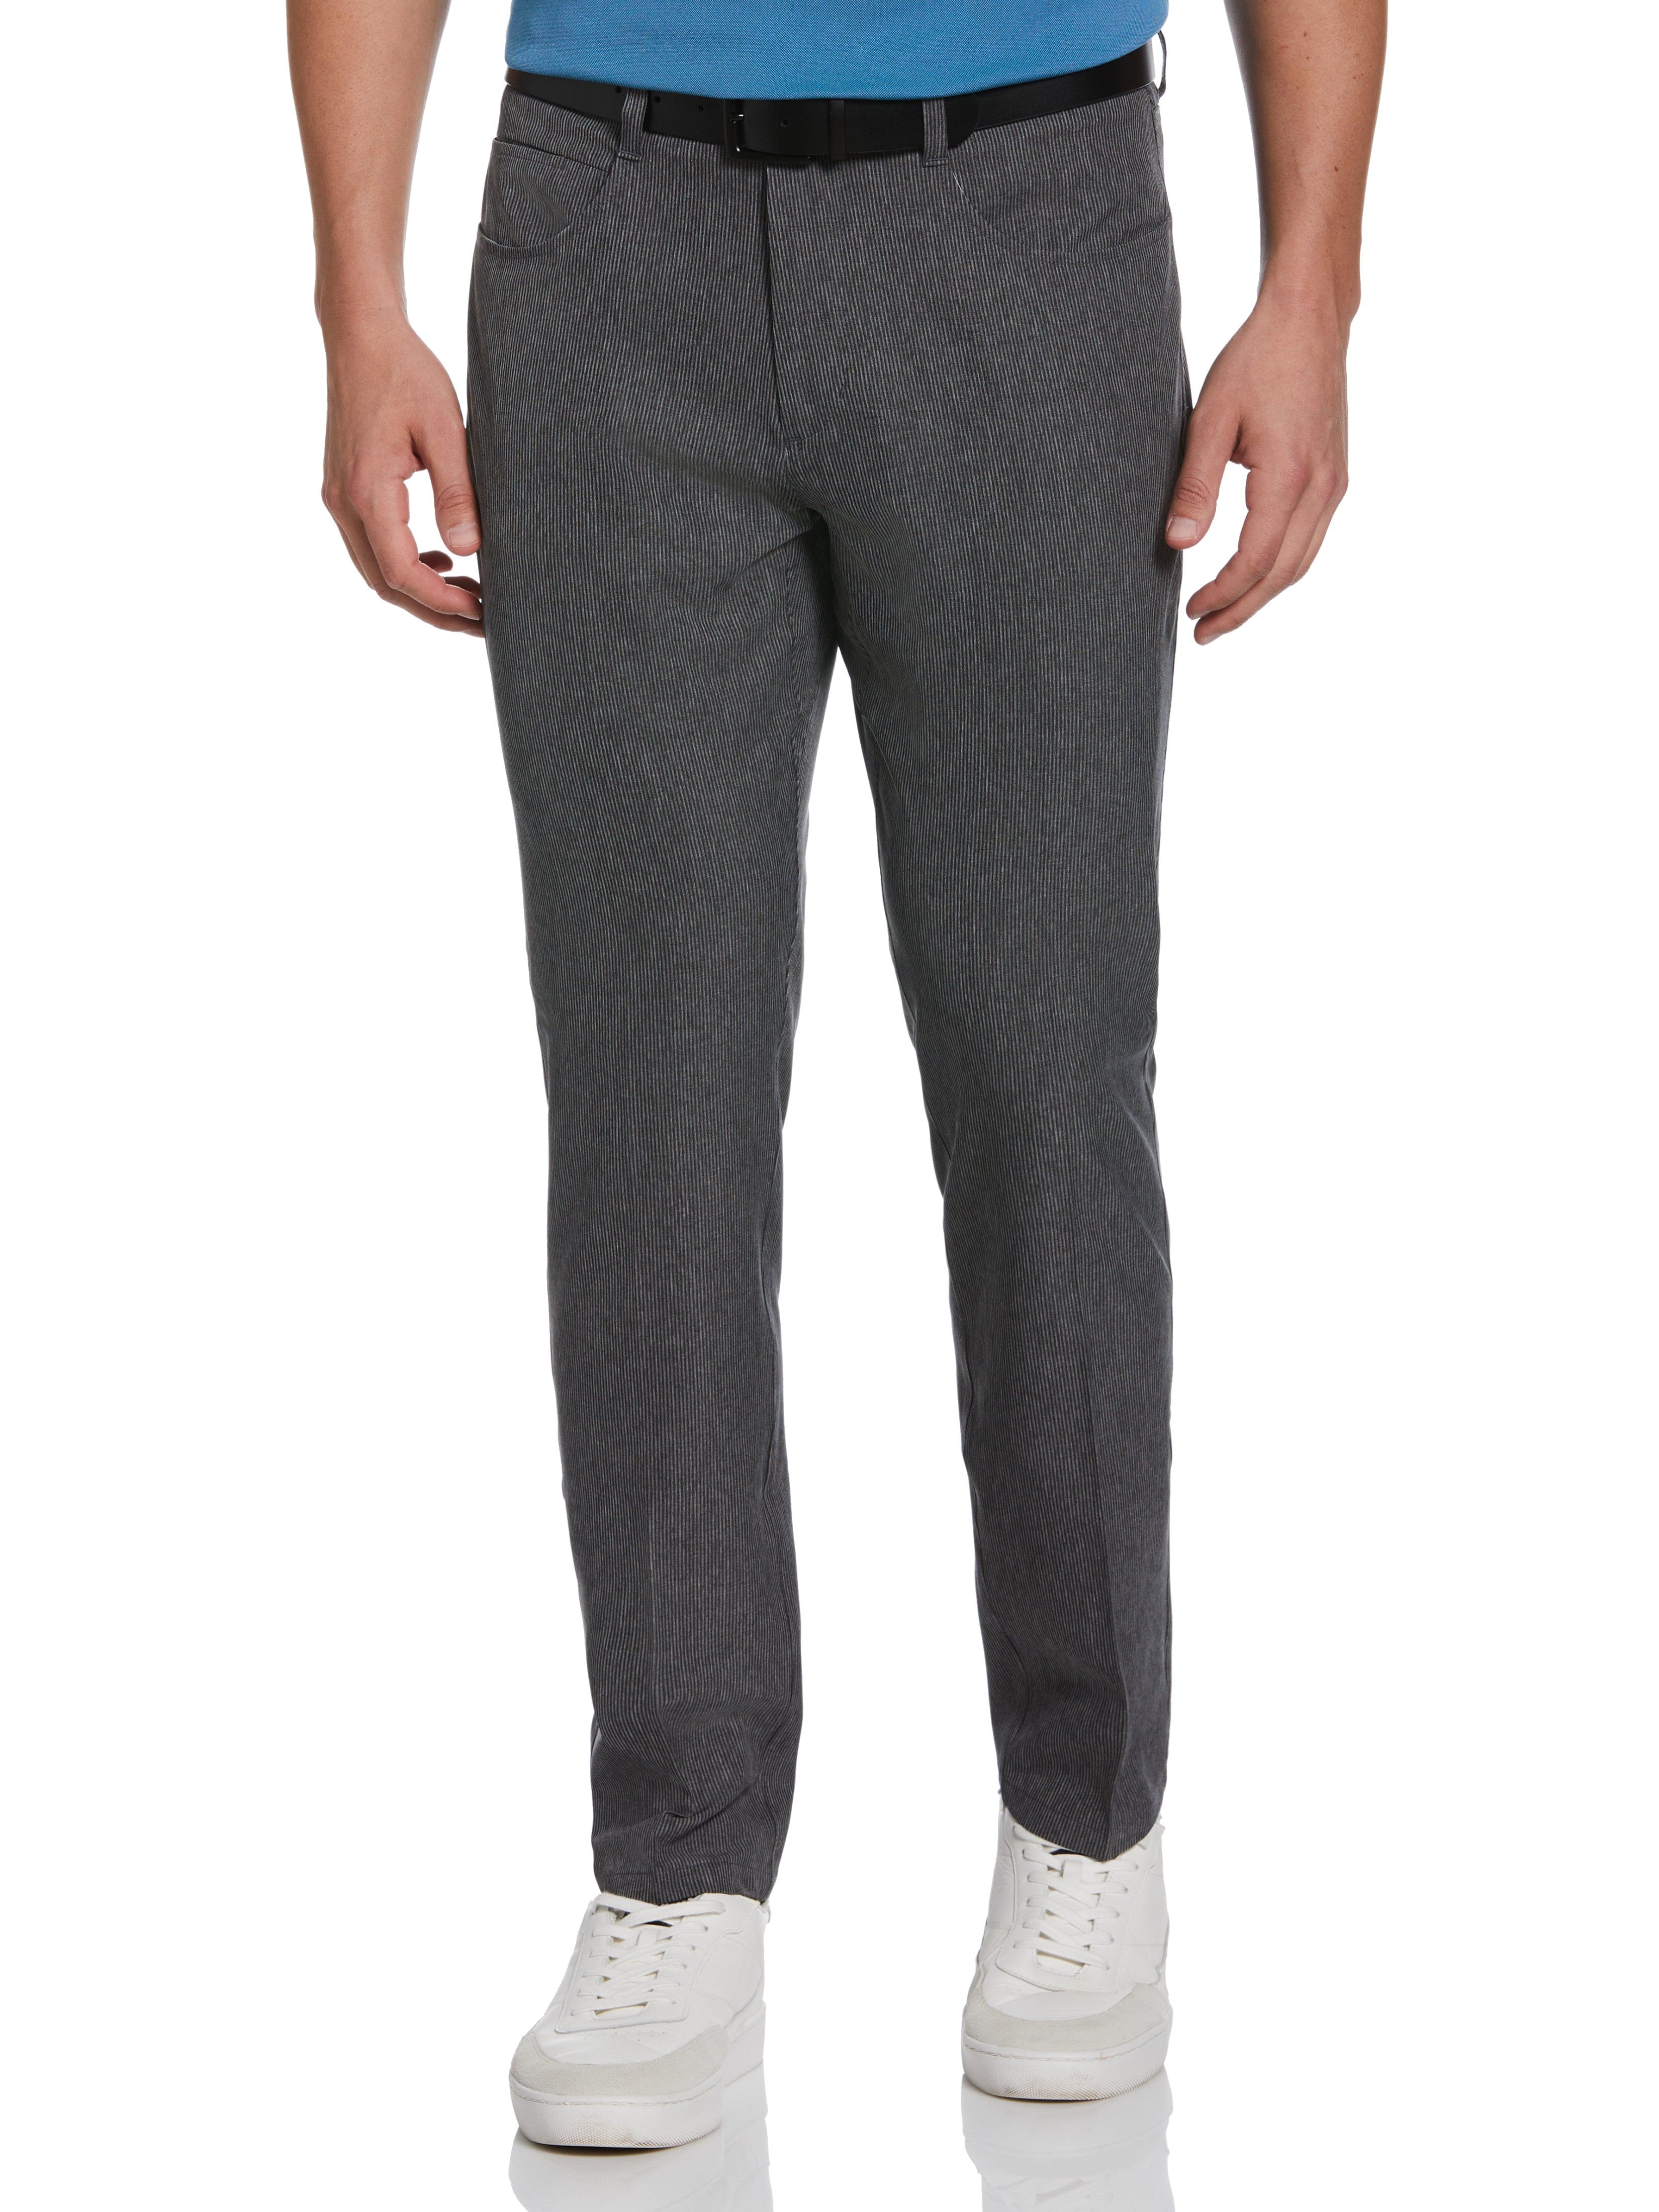 Original Penguin Mens Flat Front Fine Line Print Golf Pants, Size 38 x 32, Black, Polyester/Elastane | Golf Apparel Shop